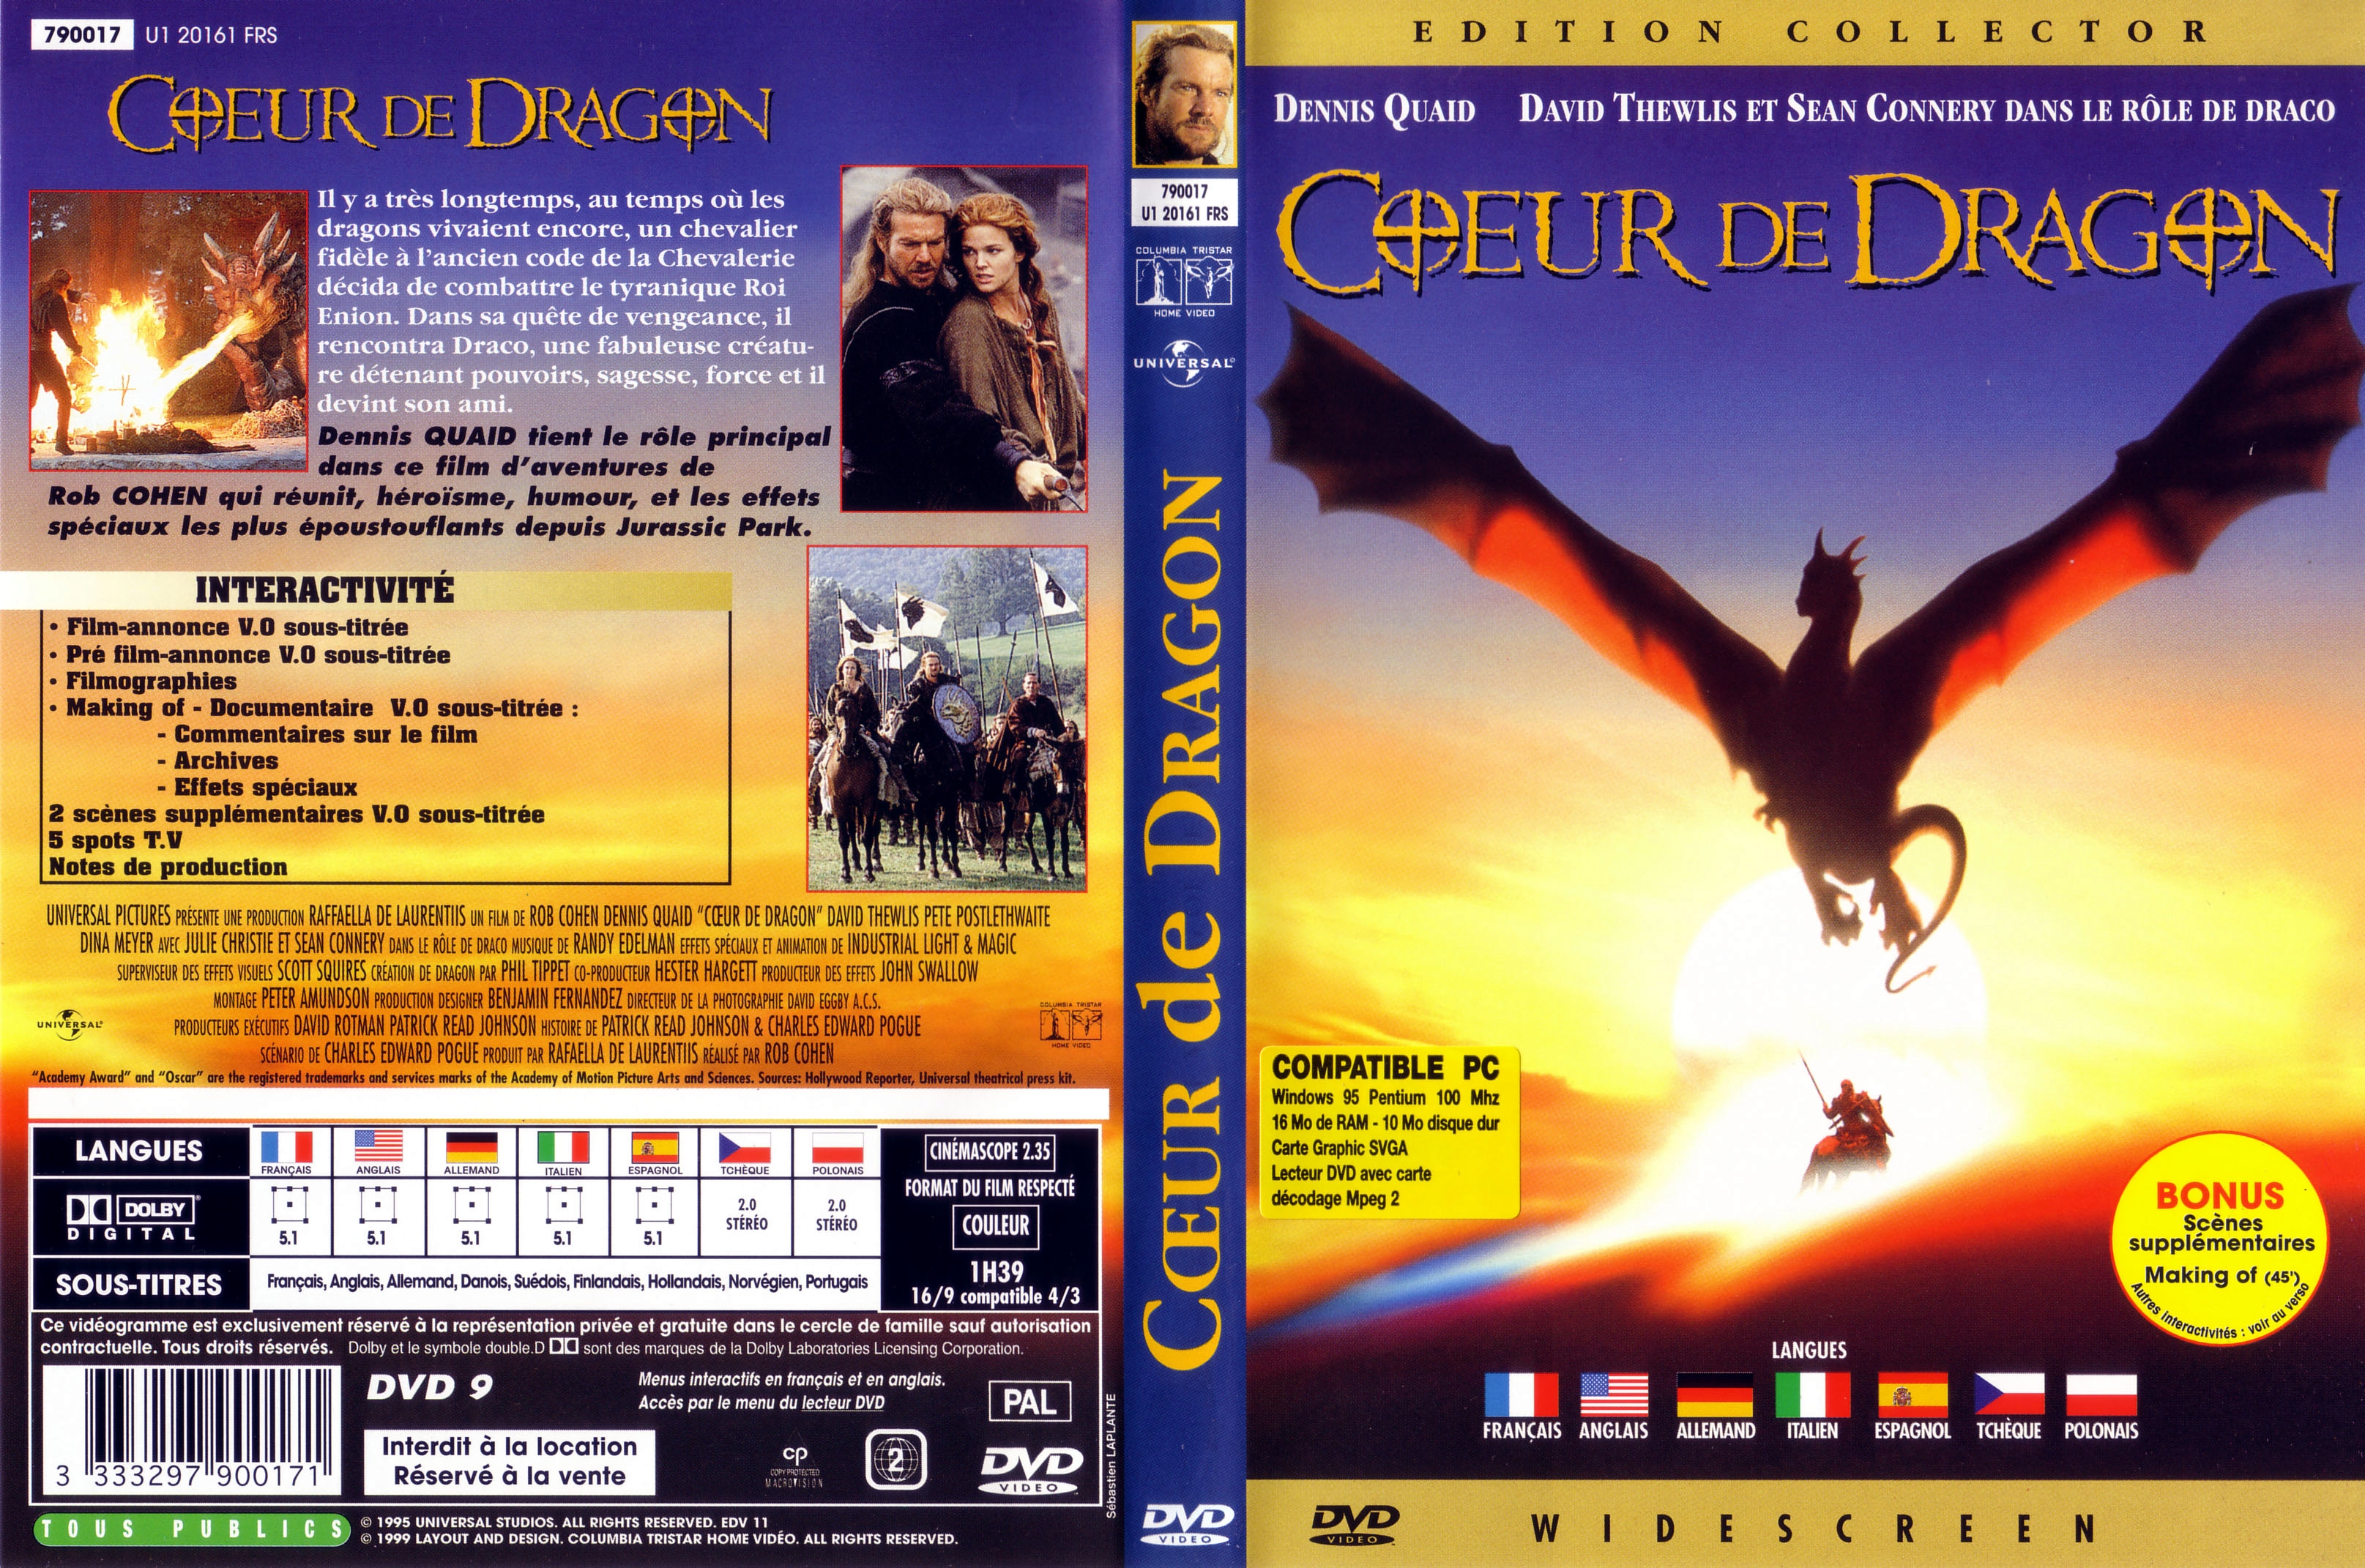 Jaquette DVD Coeur de dragon v2